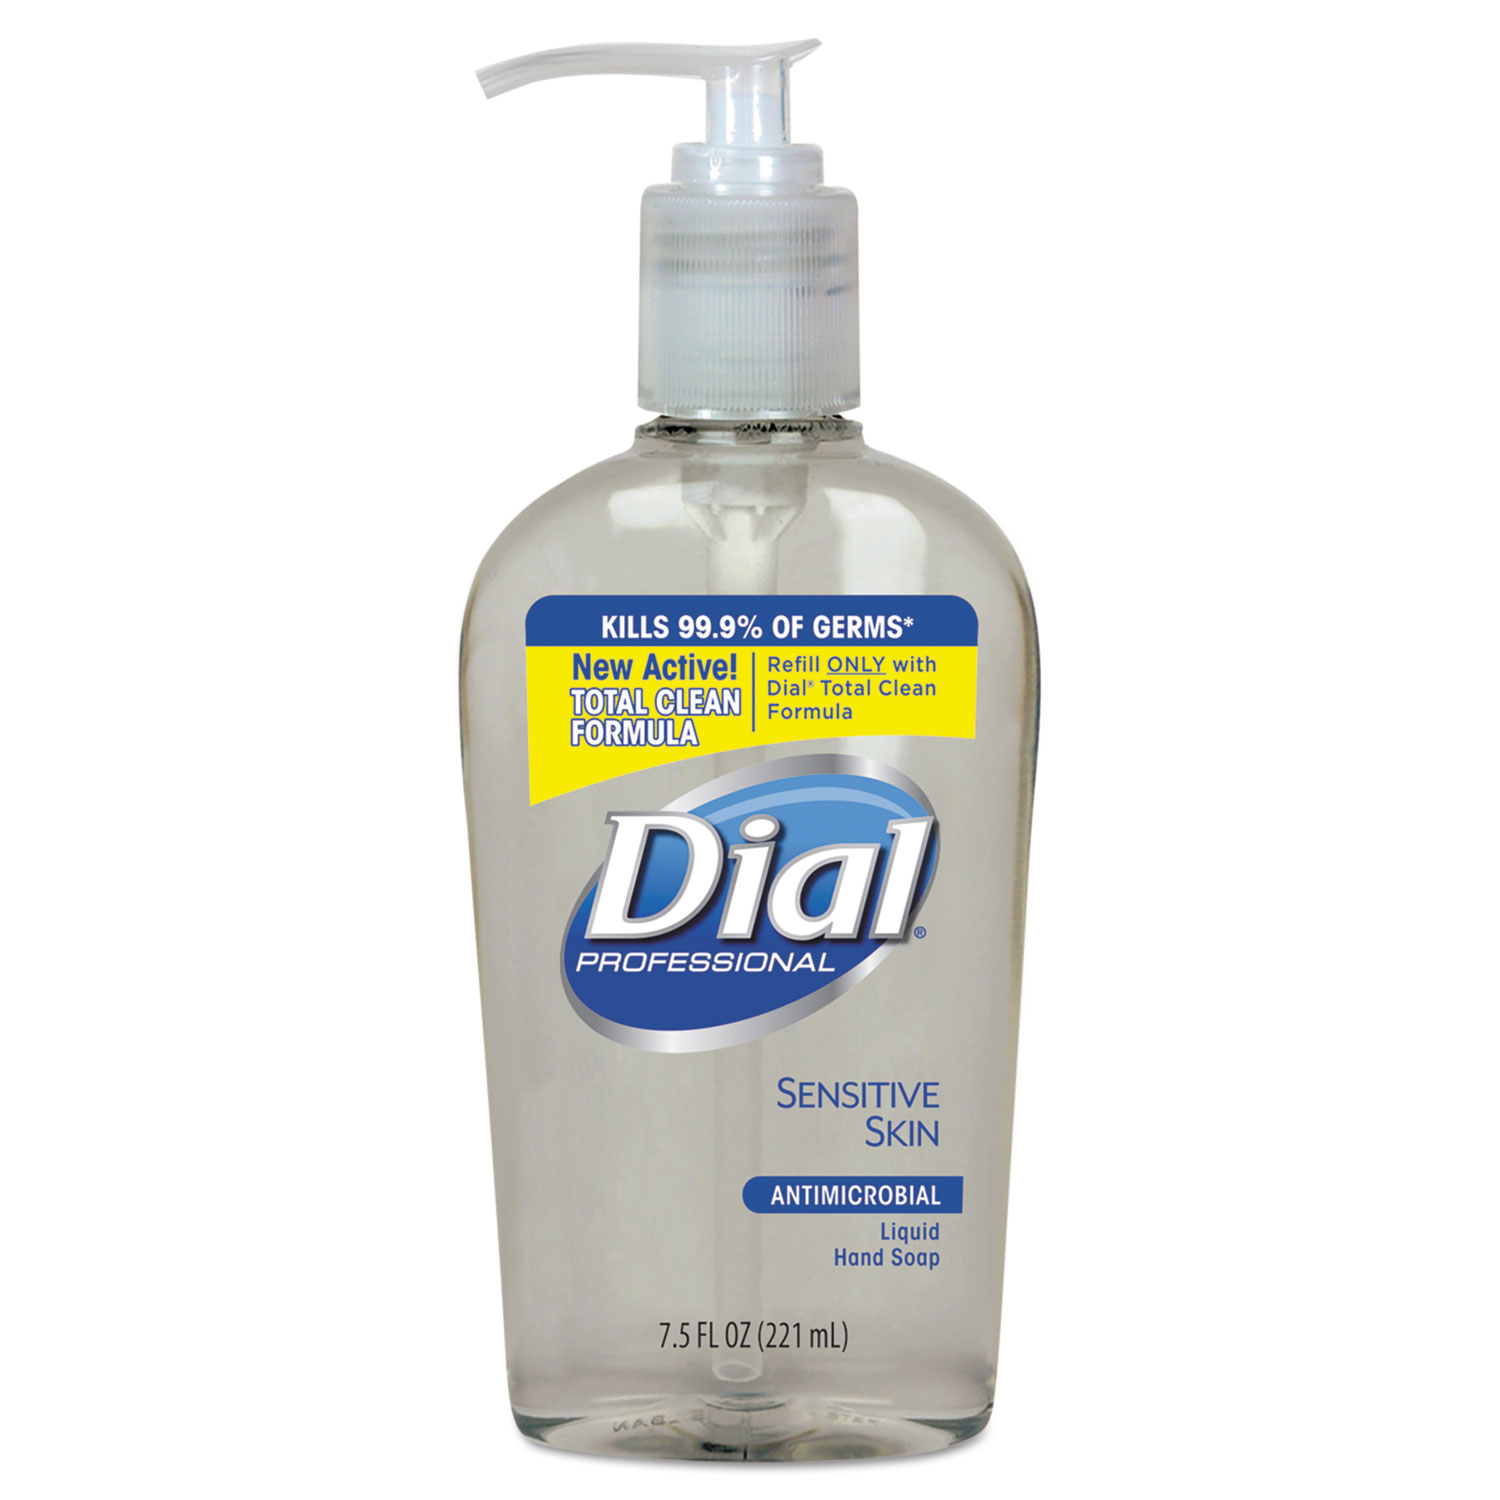  Dial Professional DIA 82834 Antimicrobial Soap for Sensitive Skin, 7.5 oz Decor Pump Bottle, Floral, 12/CT (DIA82834) 